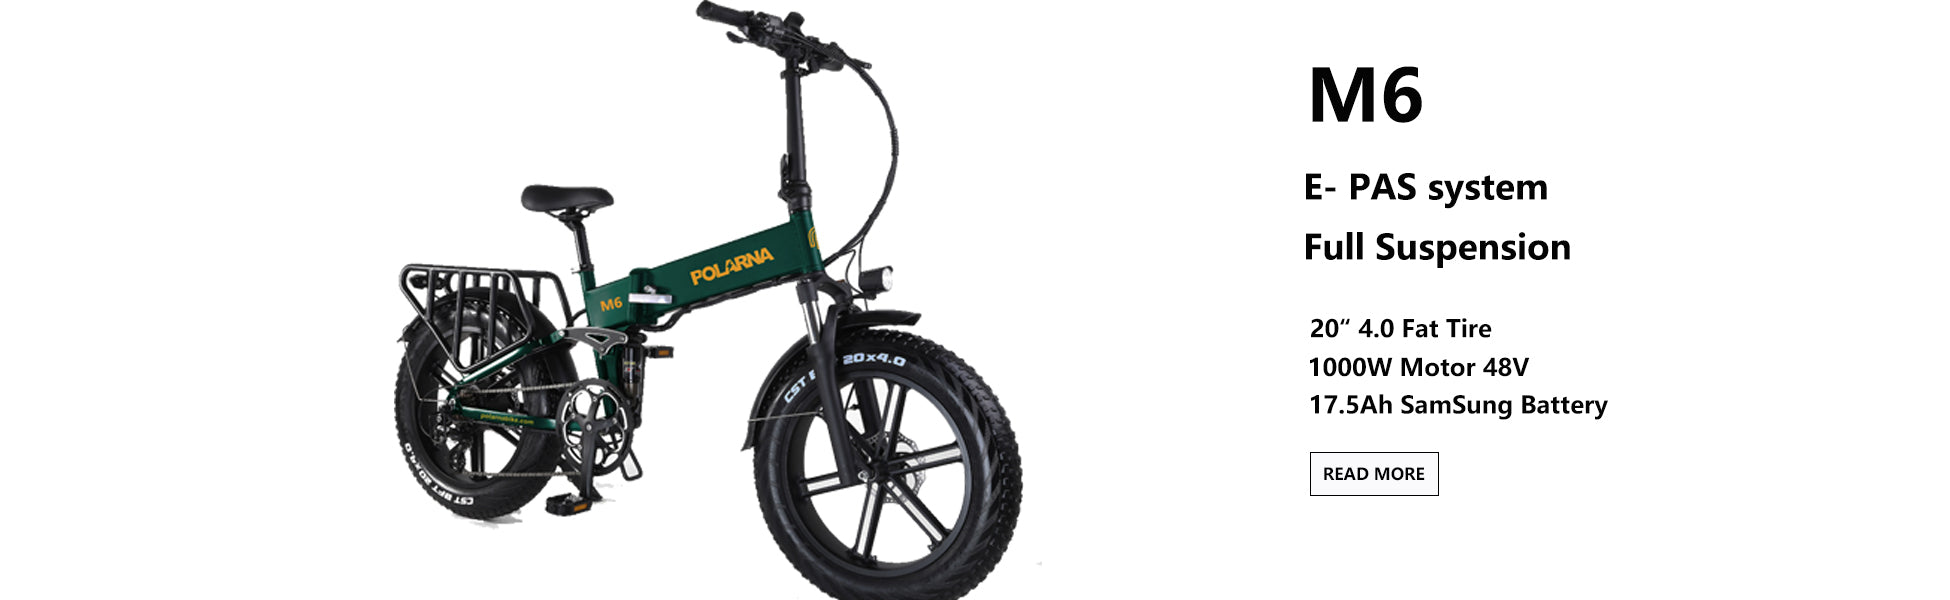 Polarna ebike,electric bicycle,electric bicycle for sale,electric bicycle for adults,electric bicycles,electric bicycles for men,folding ebike